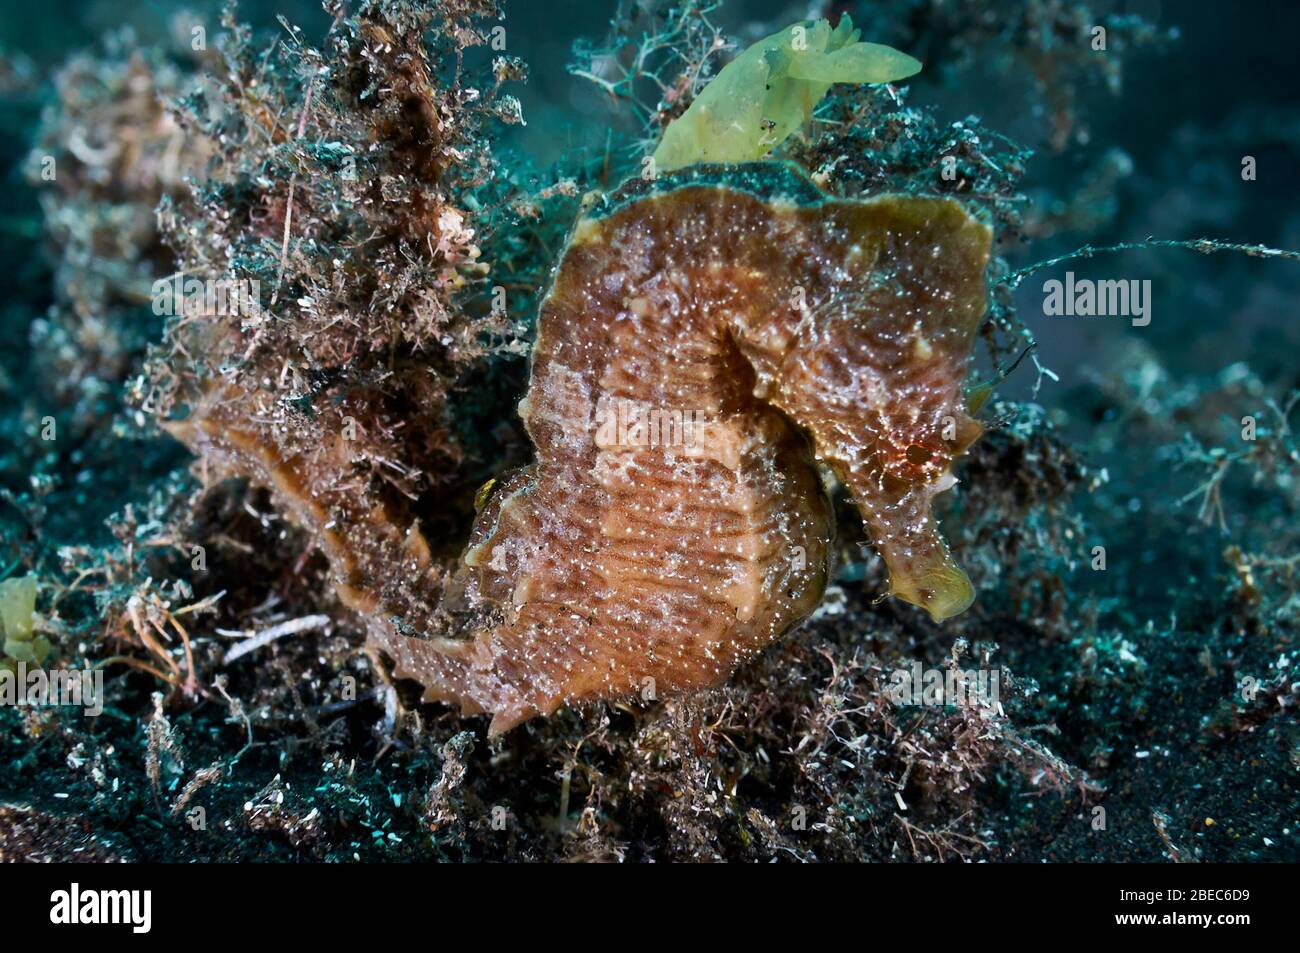 Short-snouted seahorse (Hippocampus hippocampus) underwater close-up fish portrait (Puerto Naos, La Palma, Canary Islands, Atlantic sea, Spain) Stock Photo